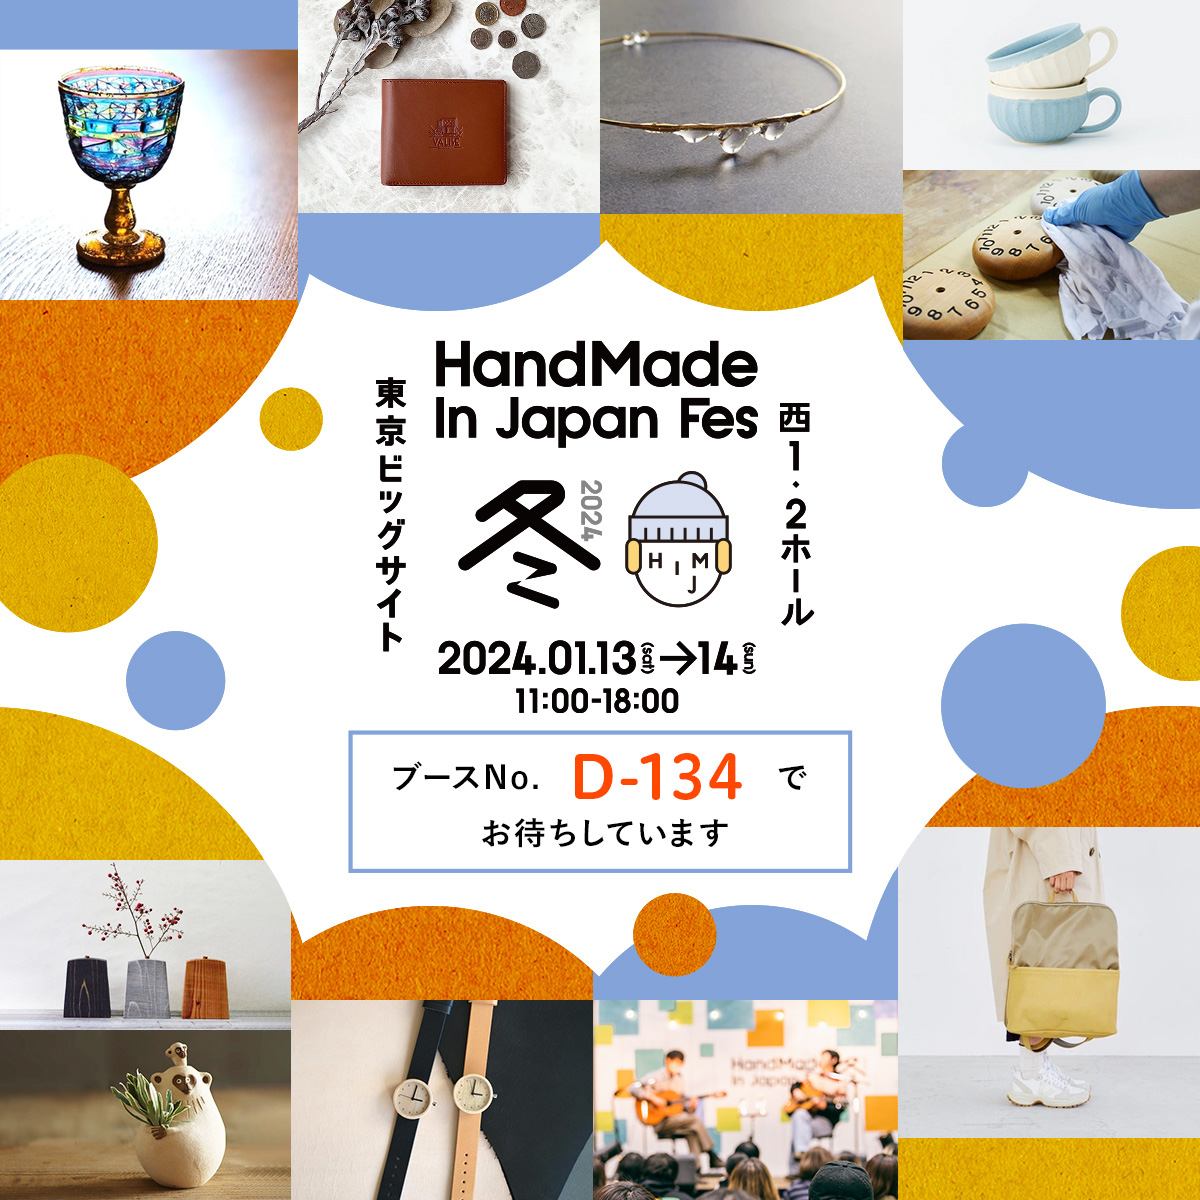 「HandMade in Japan Fes 冬 2024」に参加いたします！